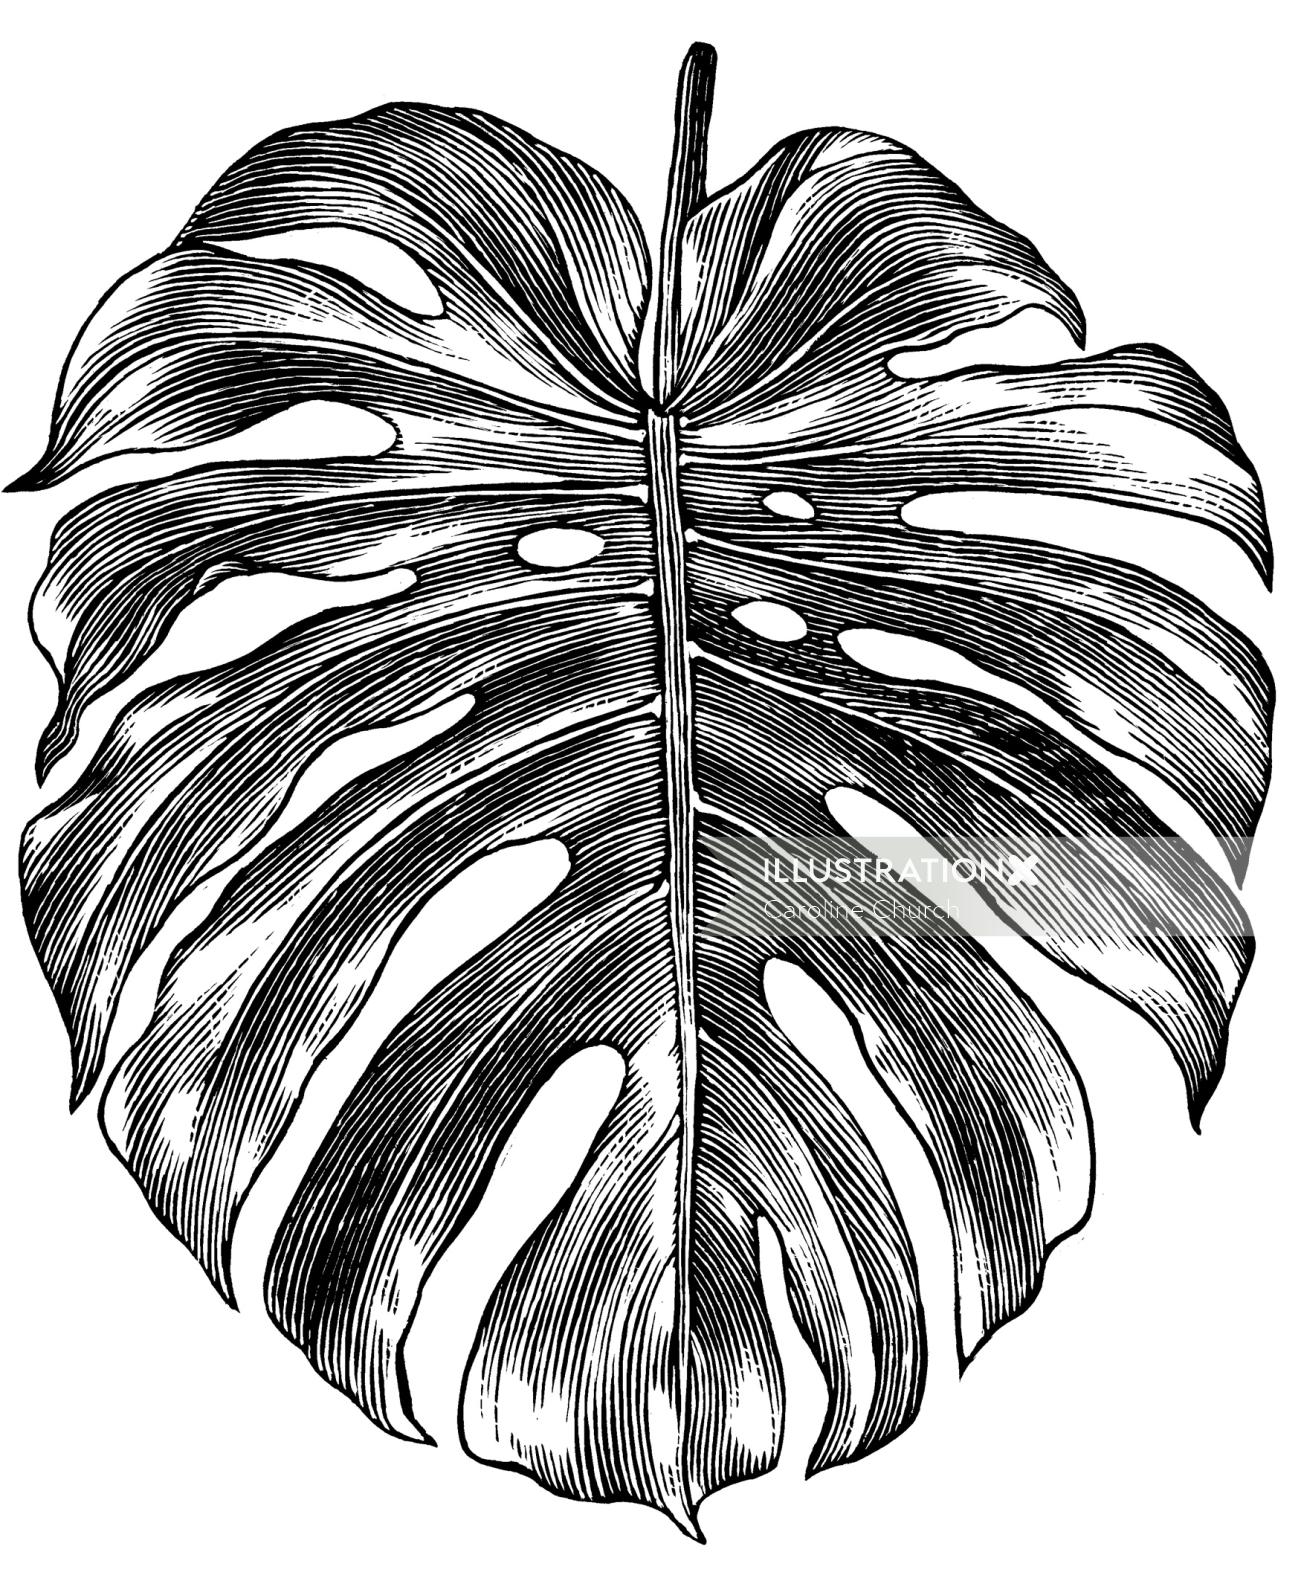 Monstera leaf illustration